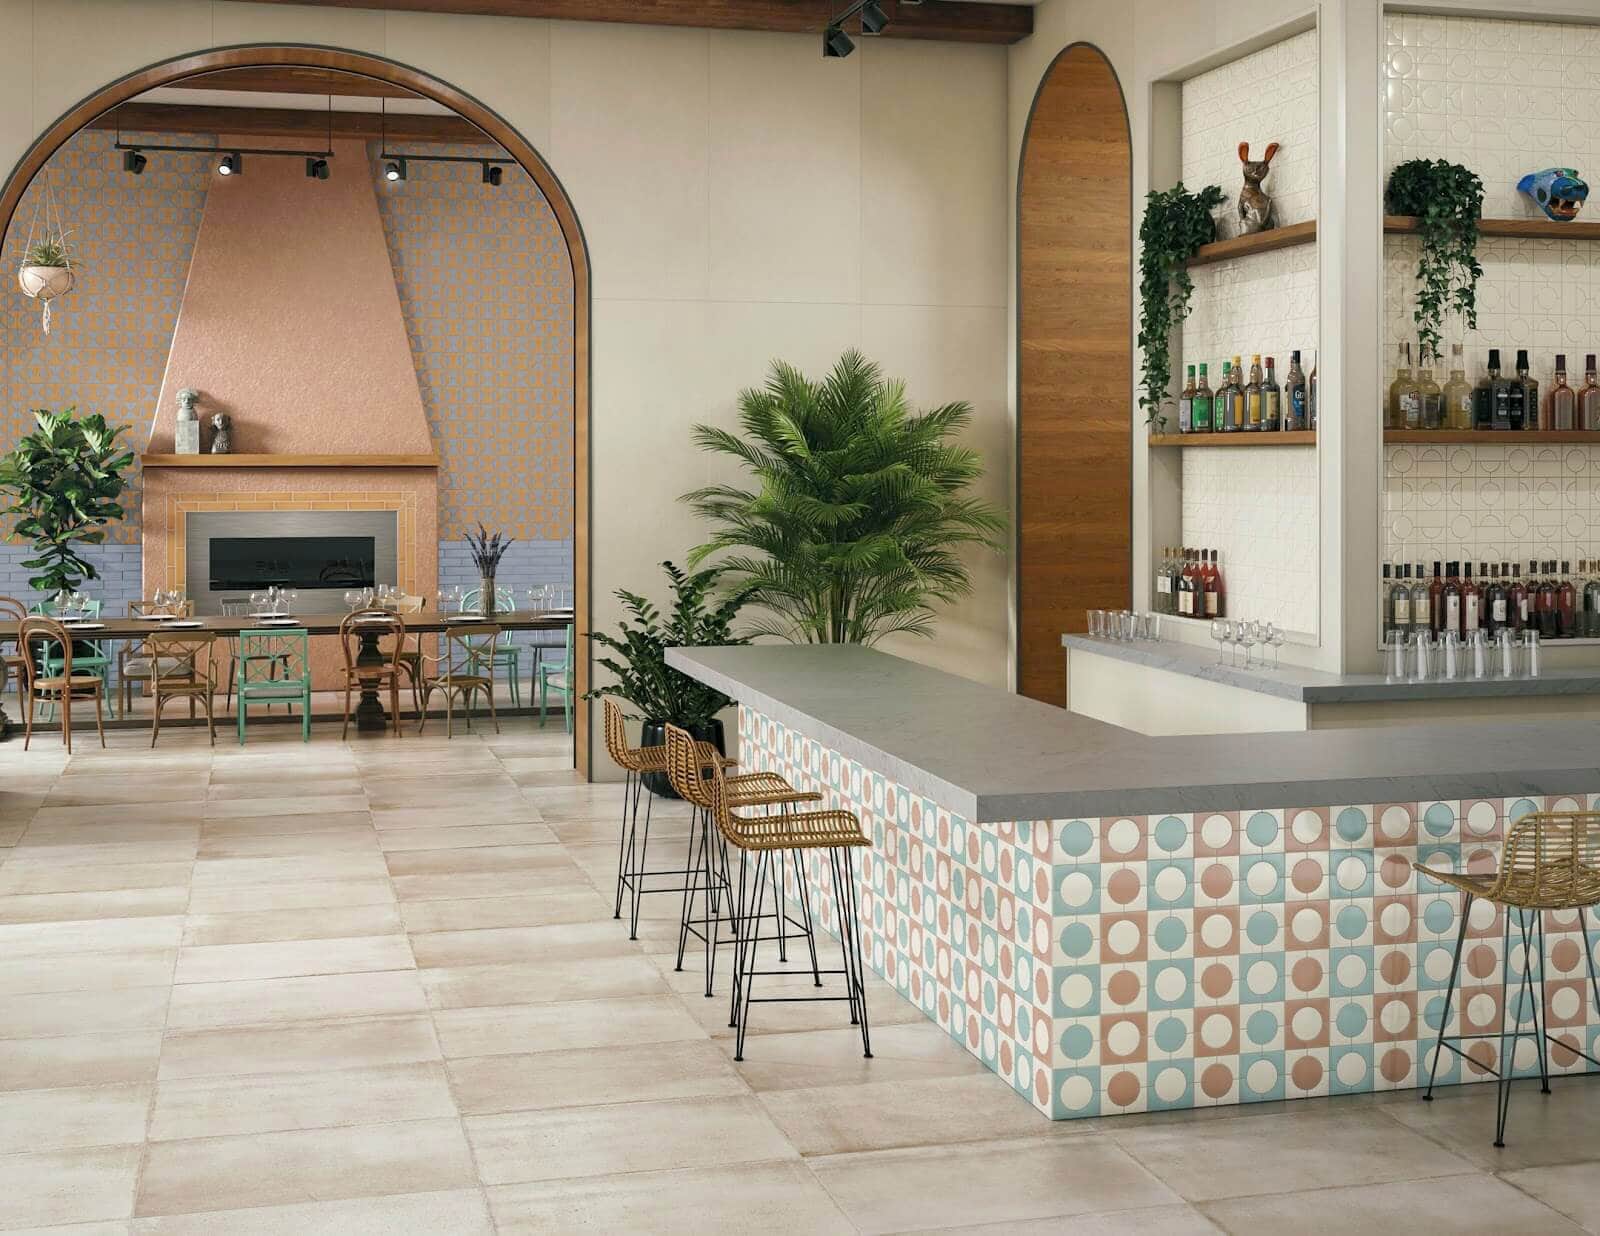 Elegant outdoor bar with horizontal grid tile pattern